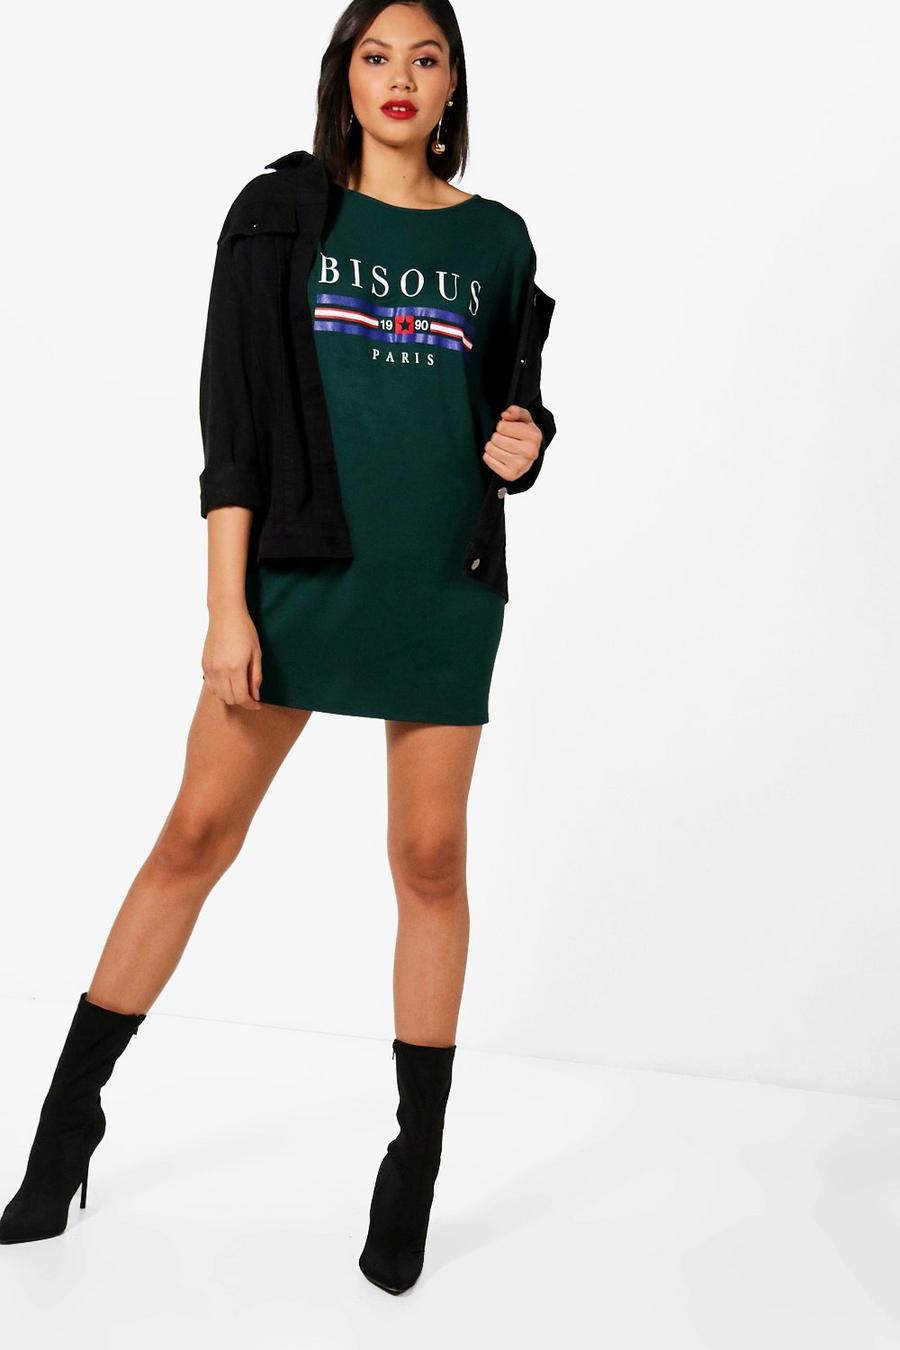 Amelia Bisous Paris T-shirt Dress image number 1